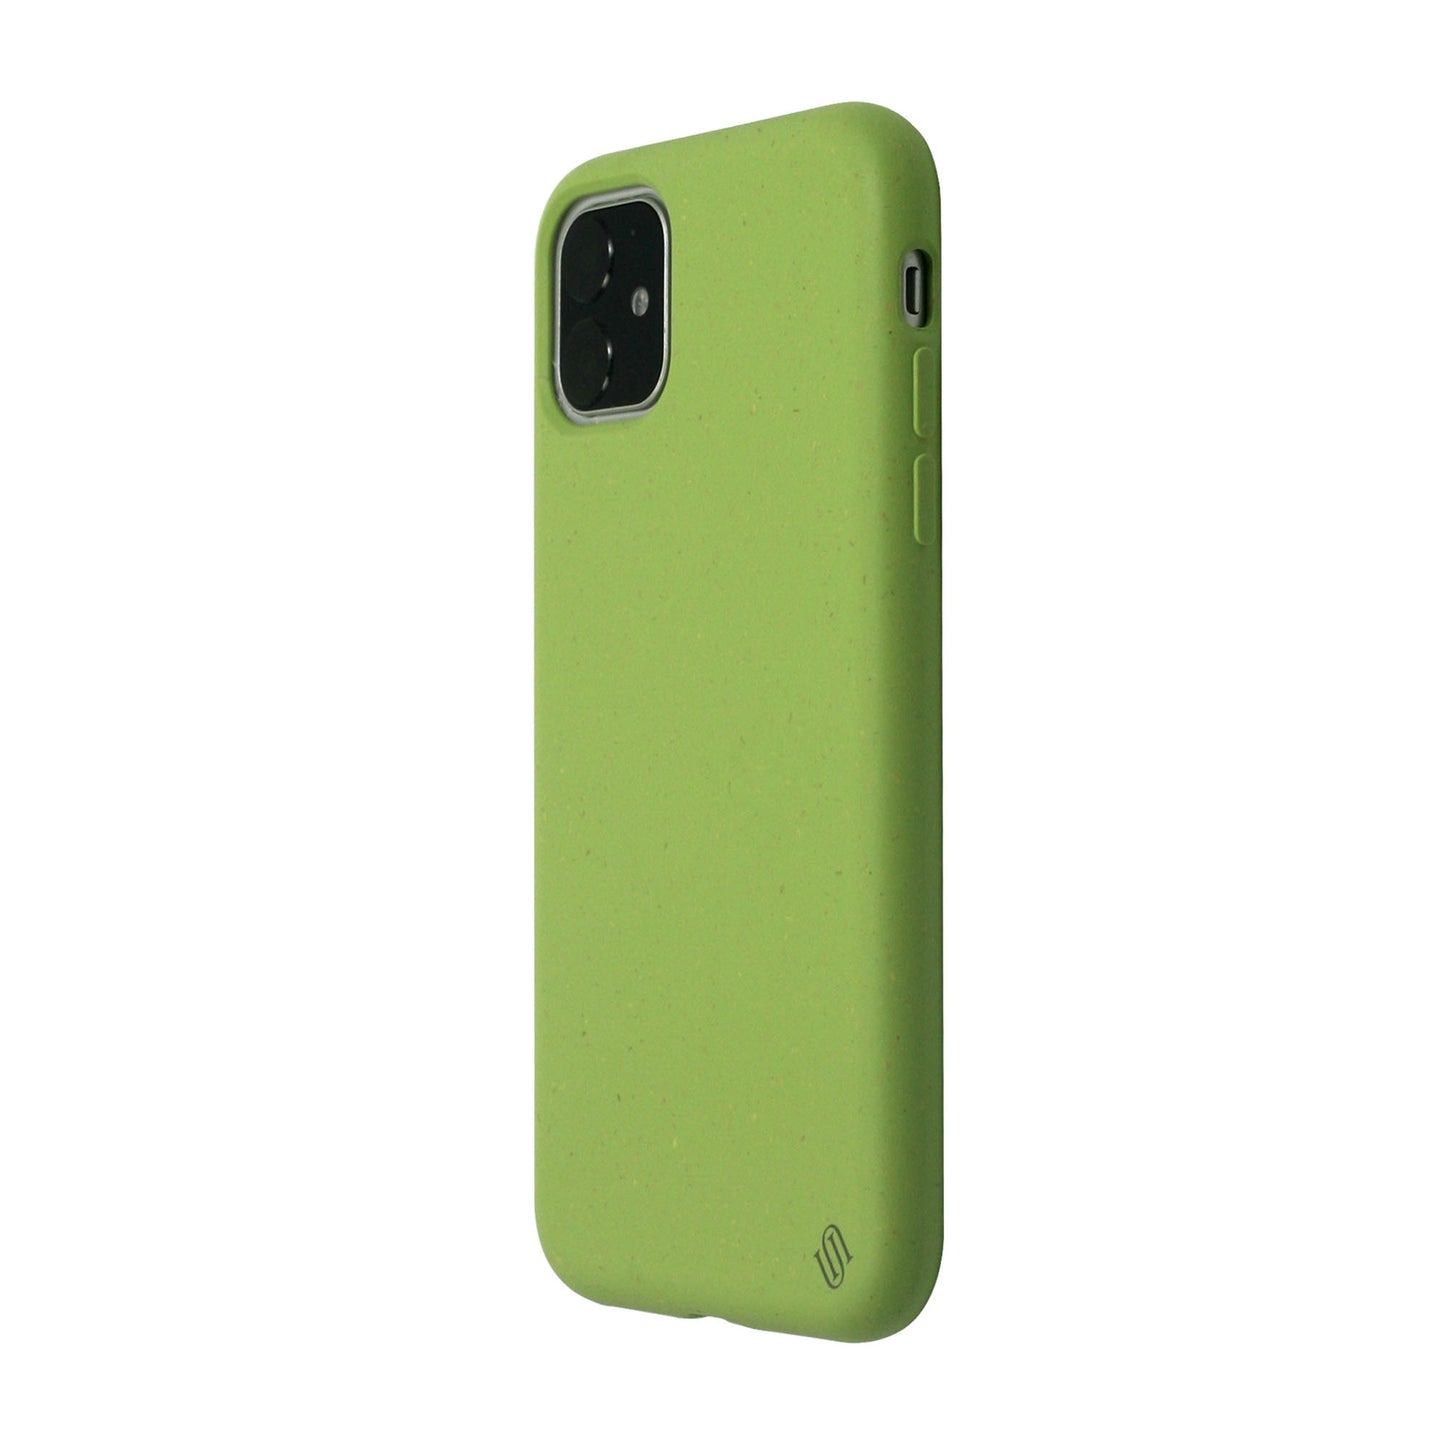 iPhone 11/XR Uunique Green (Apple) Nutrisiti Eco Back Case - 15-05119